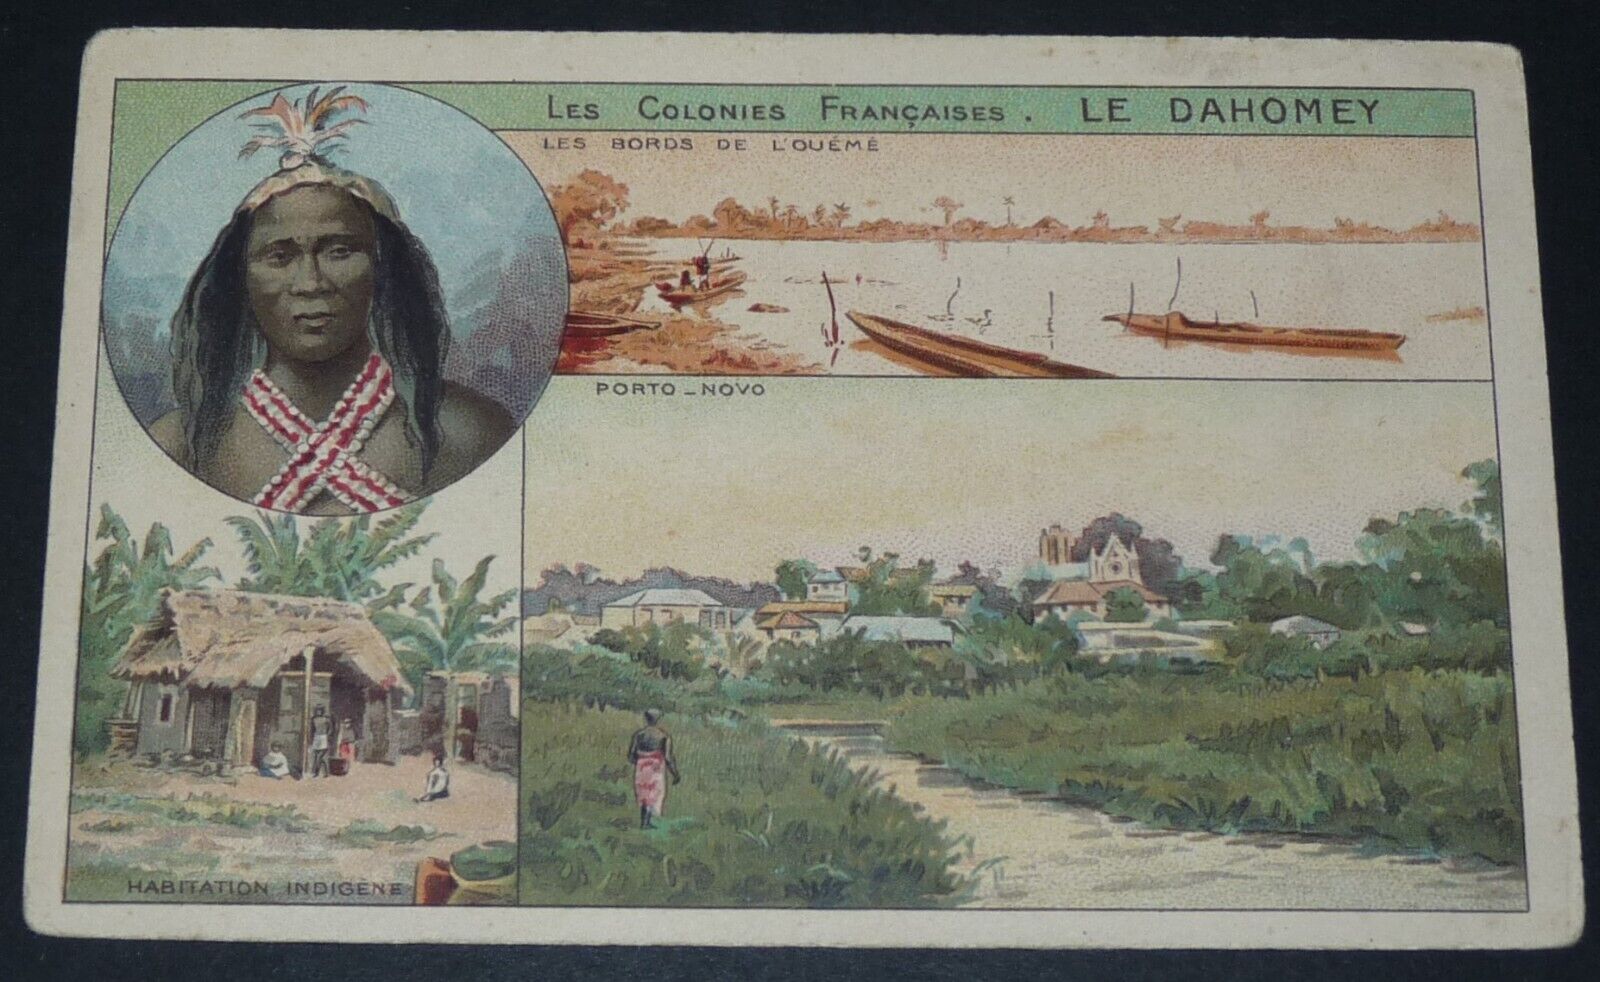 CPA CHROMO 1910 FRANCE COLONIES AFRICA DAHOMEY EDGES OUEME PORTO-NOVO INDIGENOUS